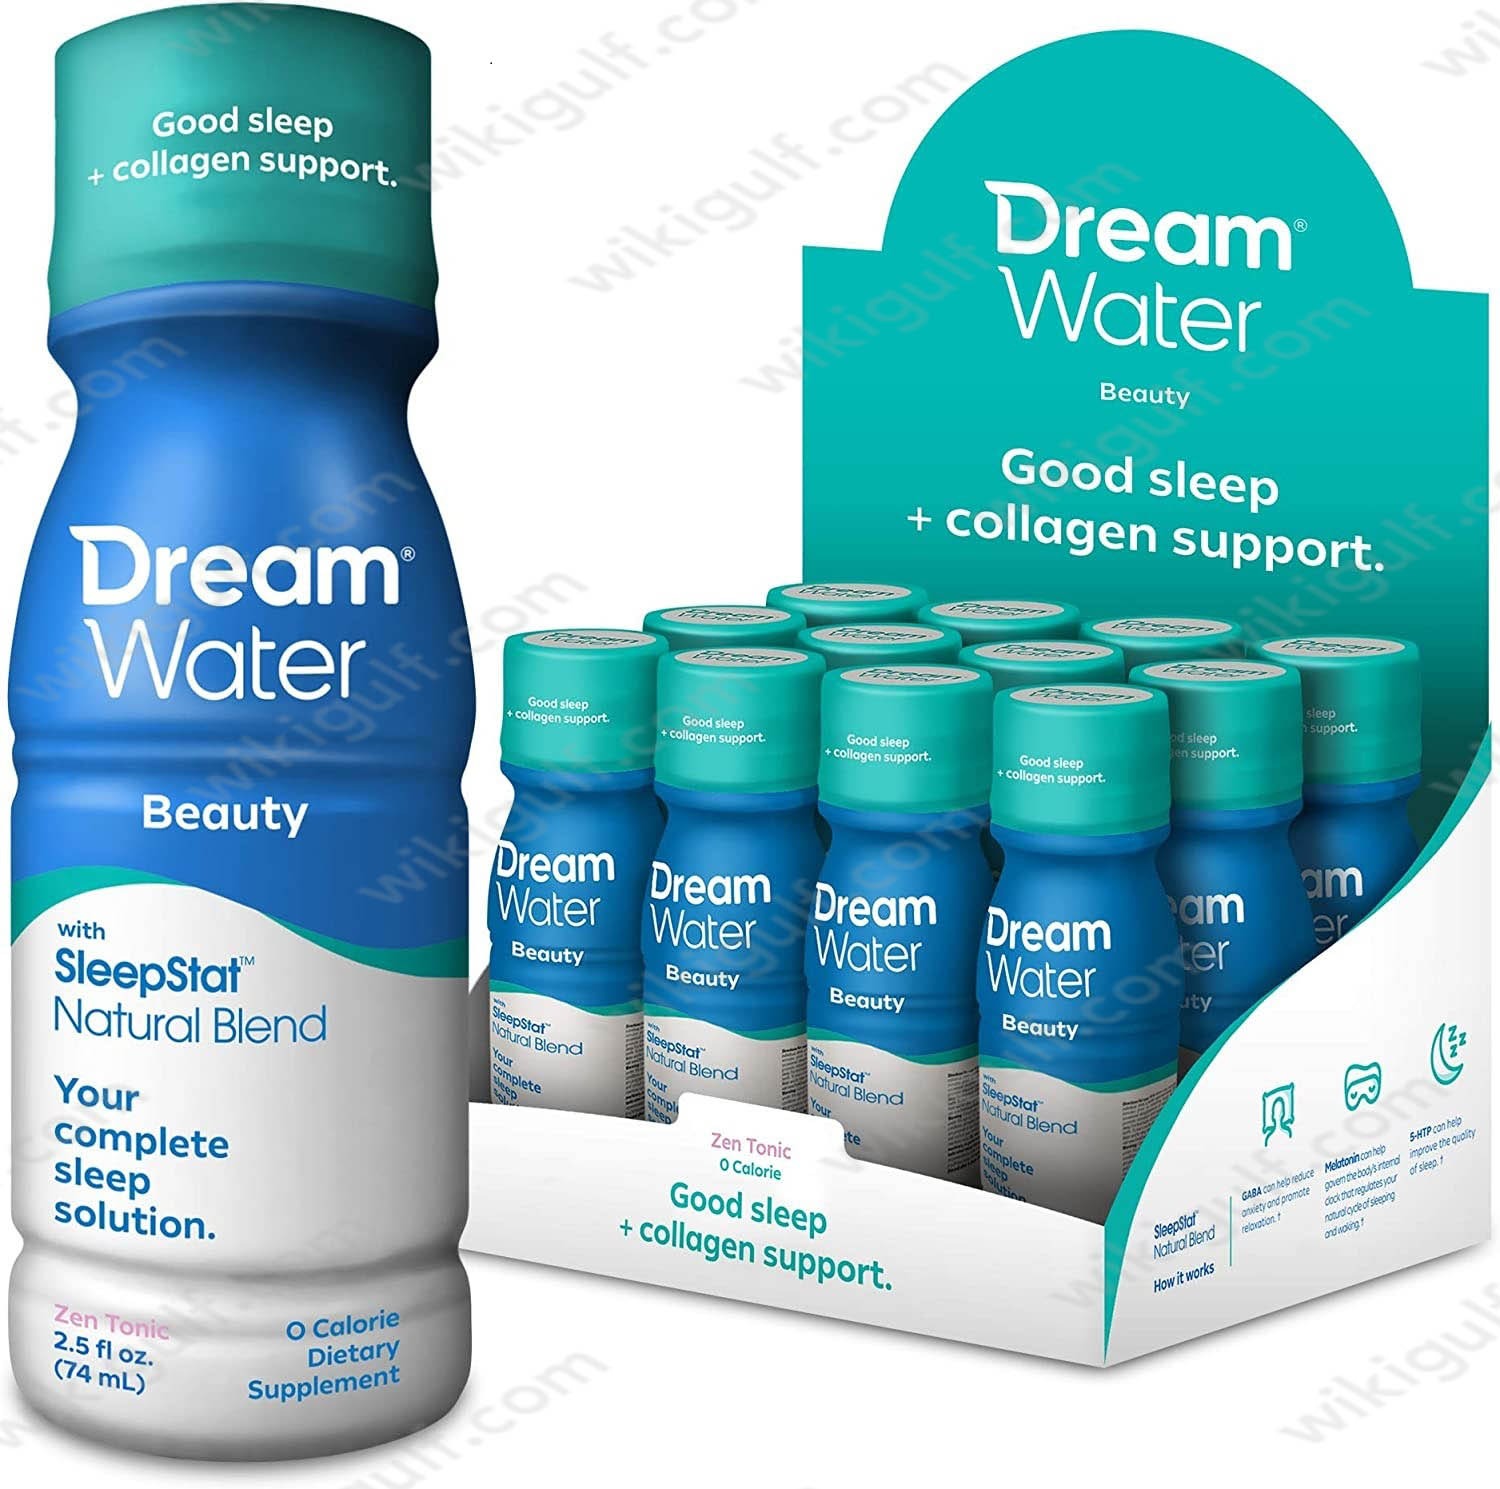 دريم ووتر Dream water